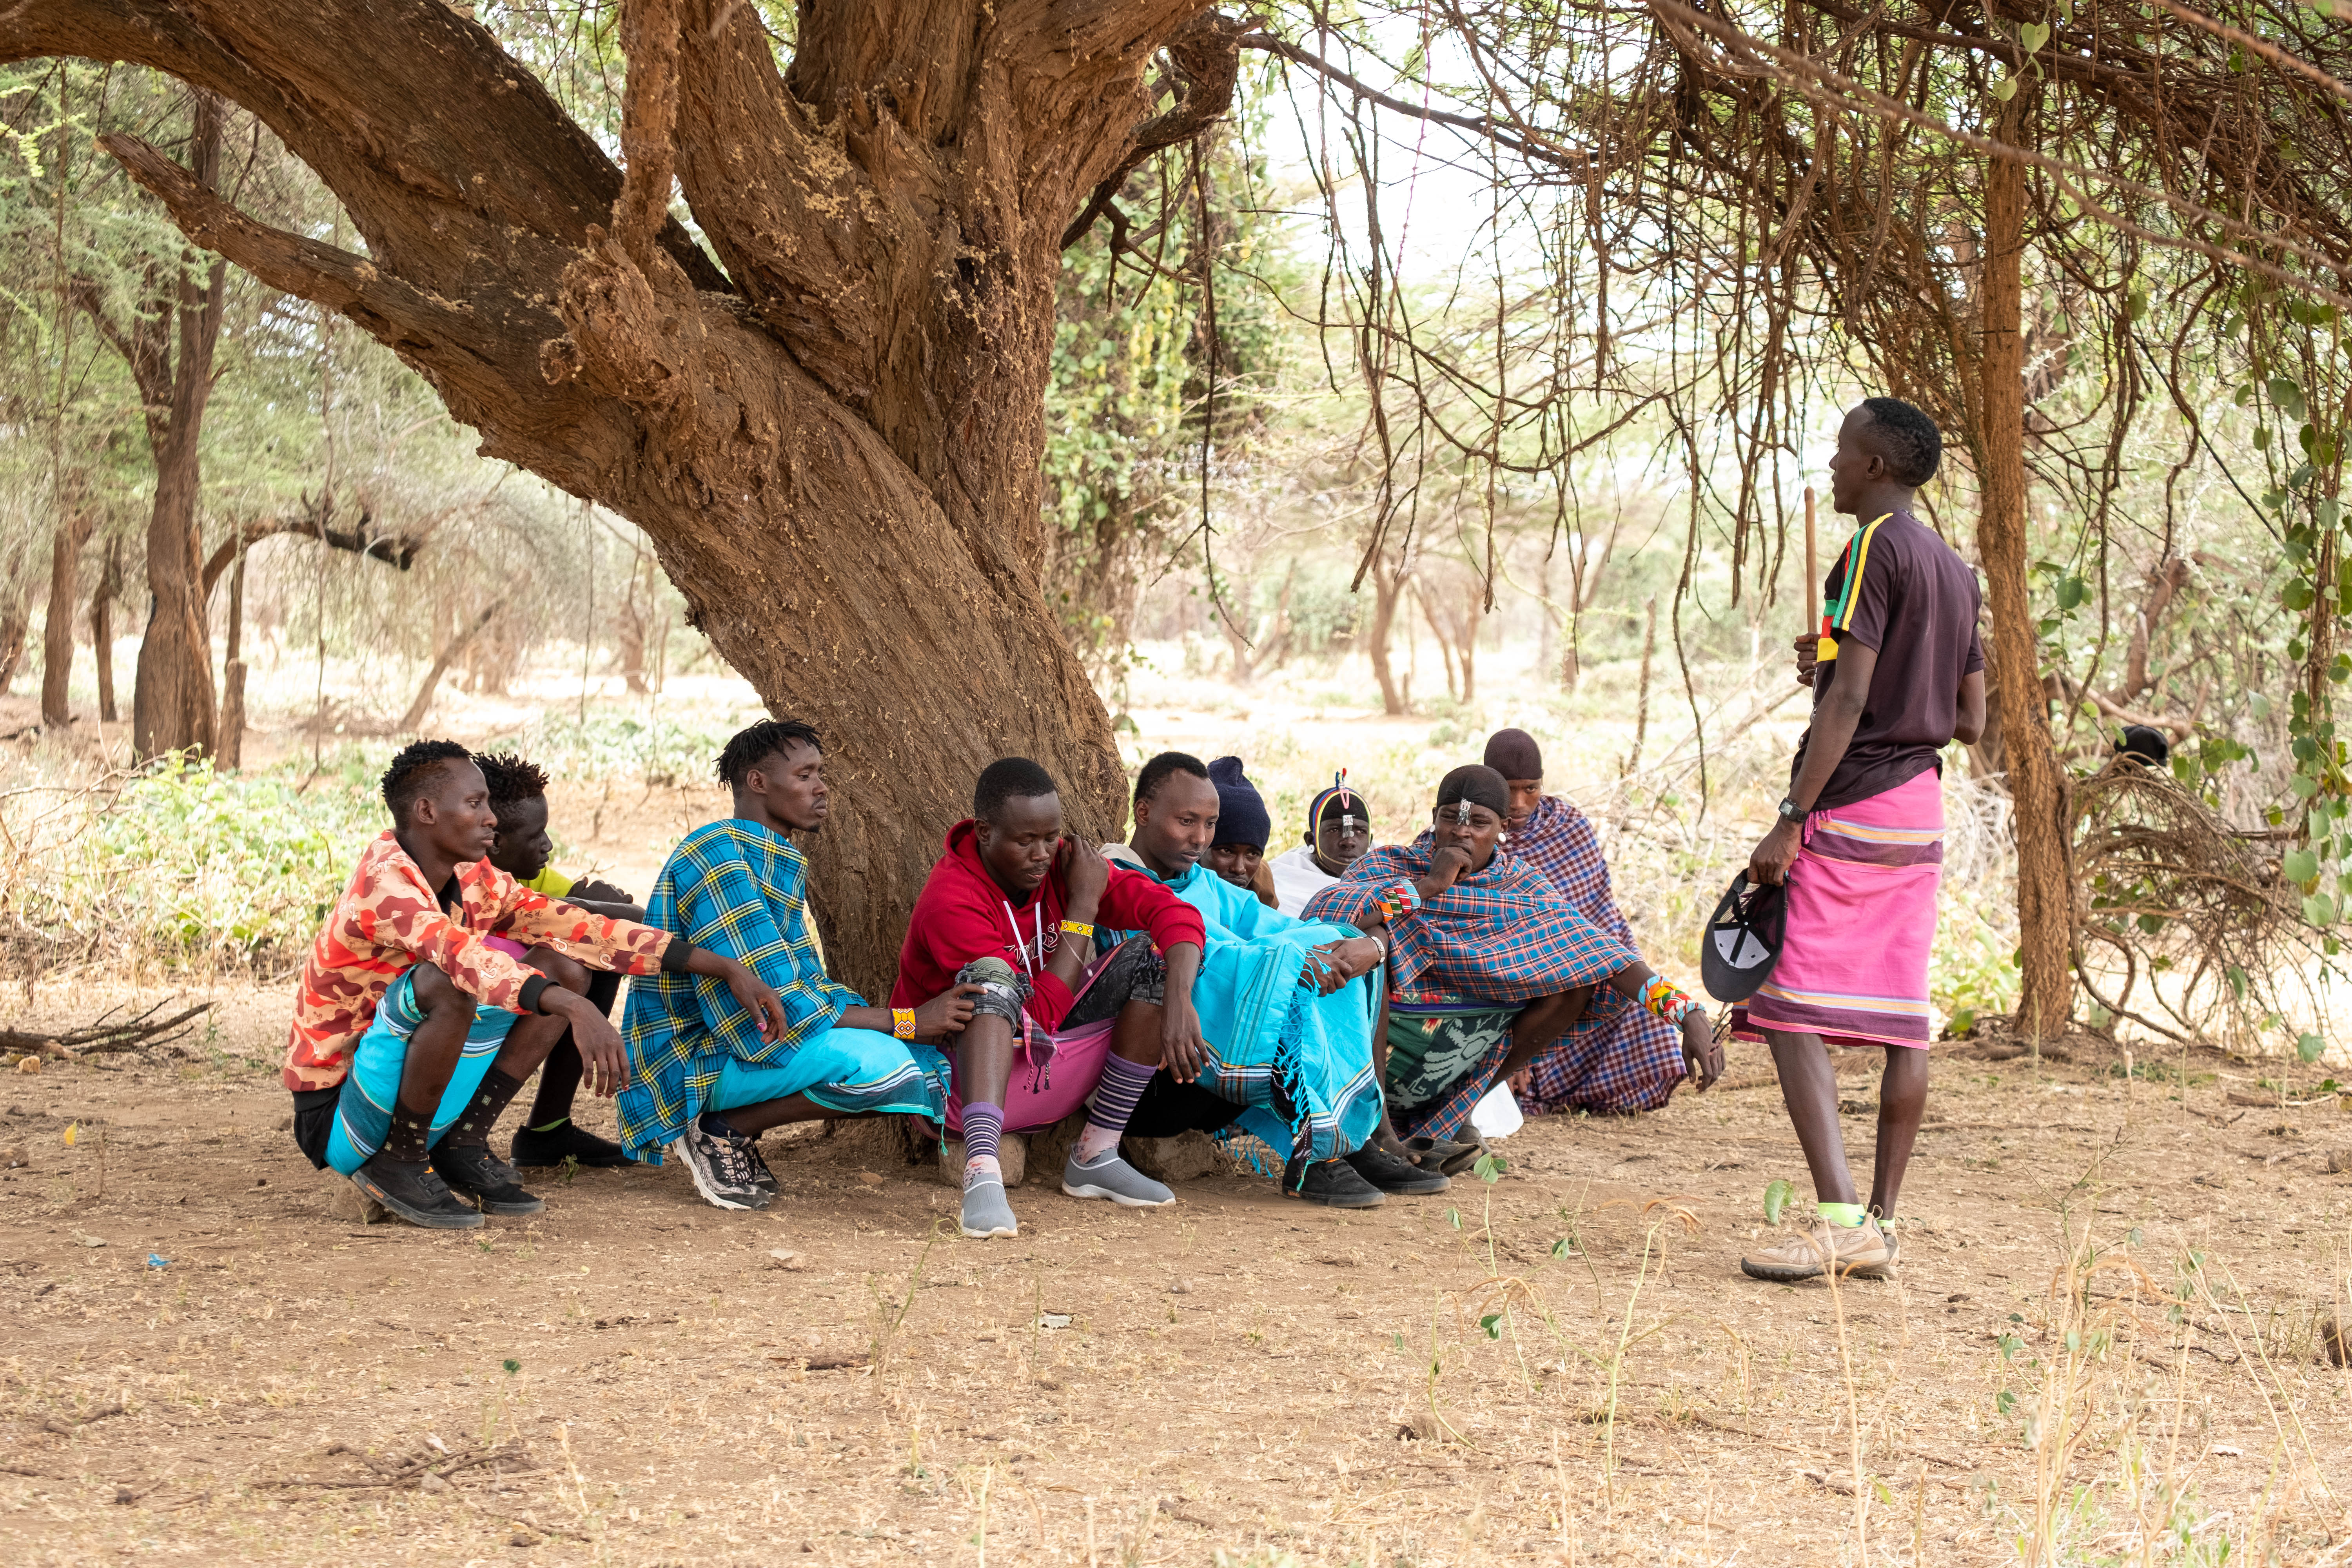 Reformed morans engage in conversation in Samburu